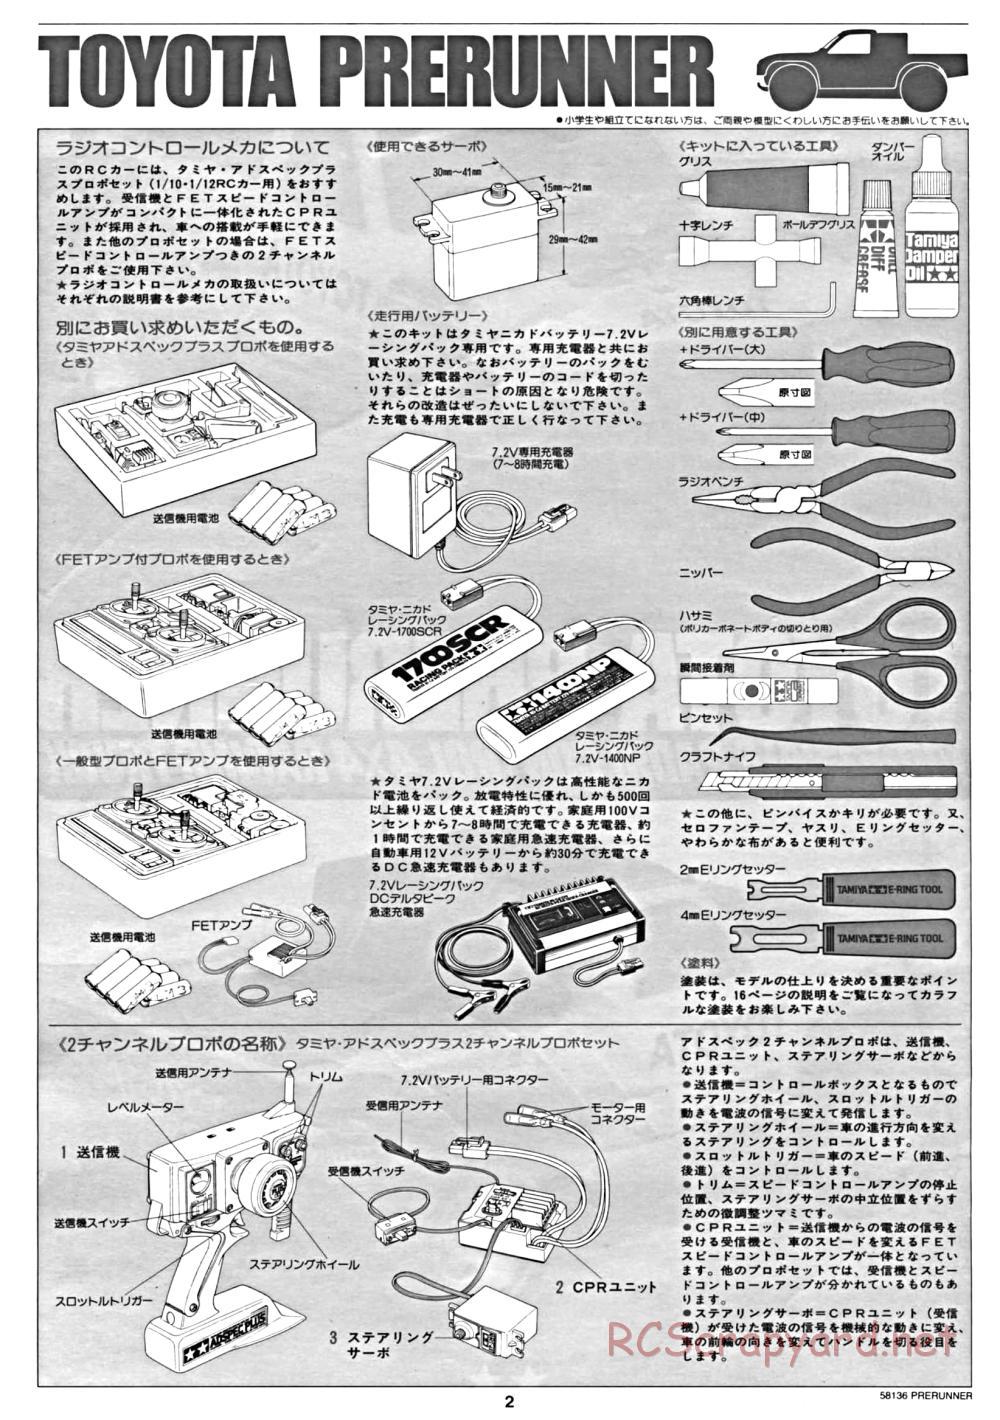 Tamiya - Toyota Prerunner Chassis - Manual - Page 2